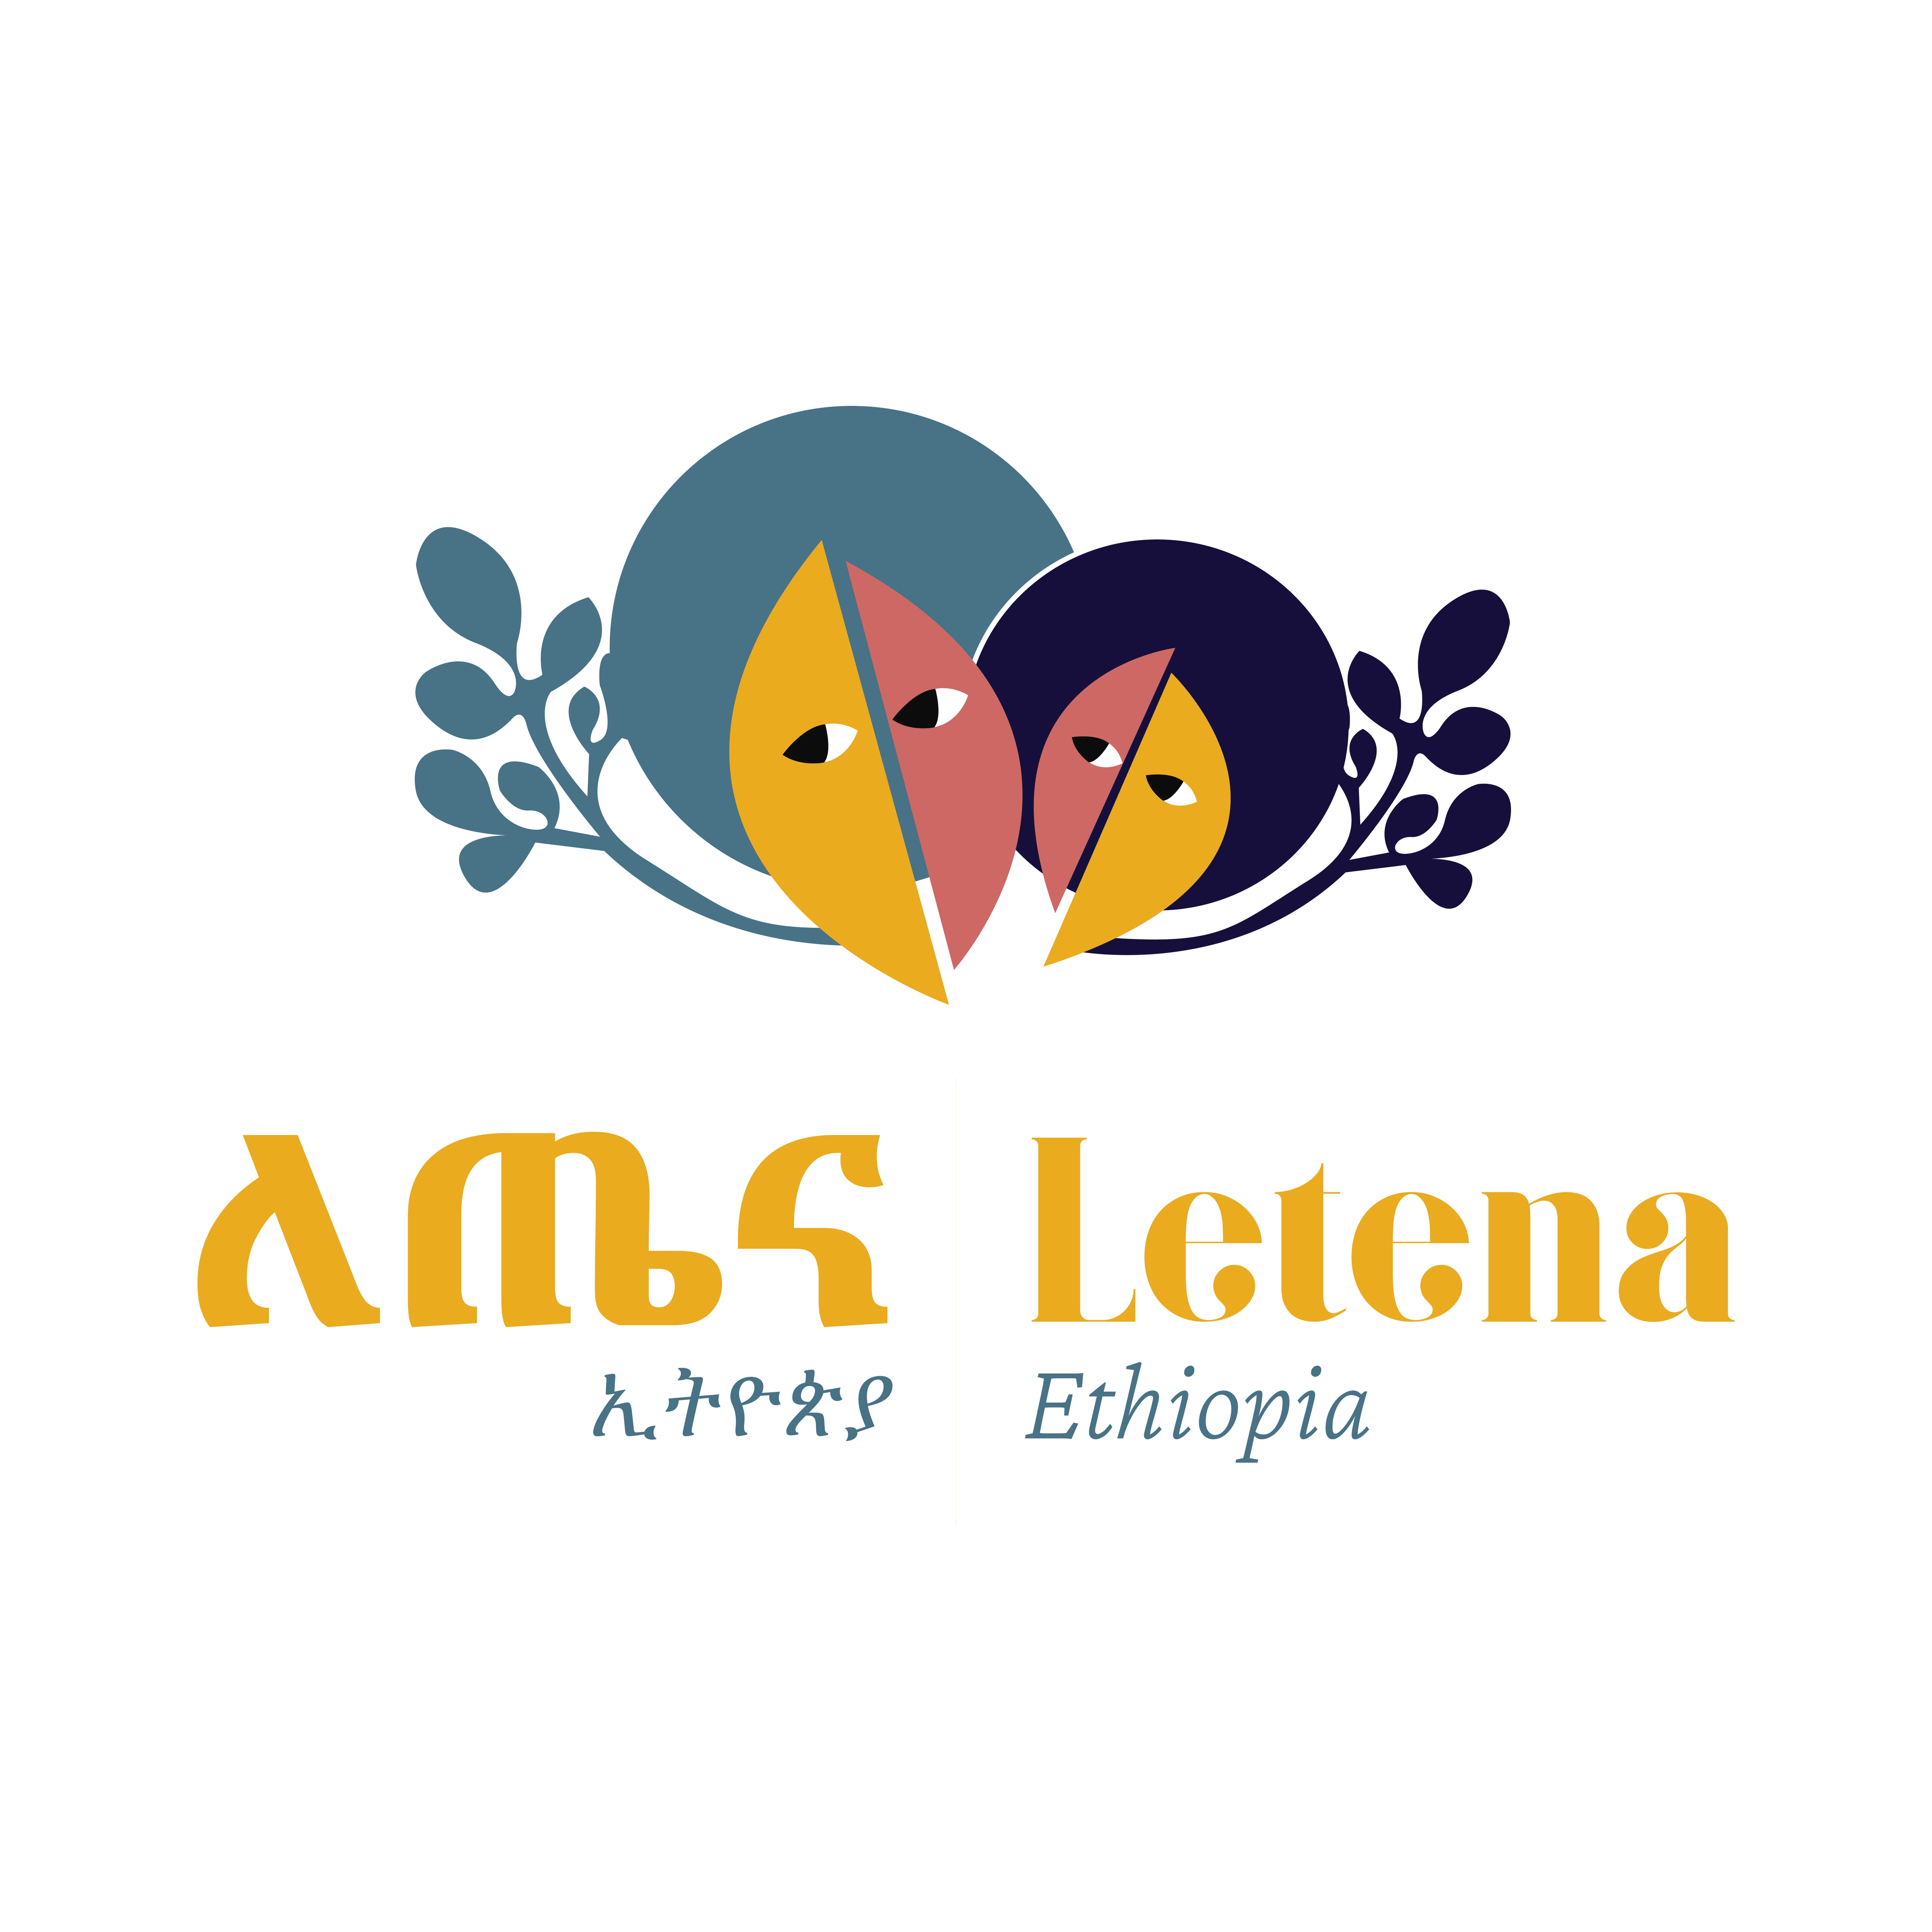 Letena Ethiopia